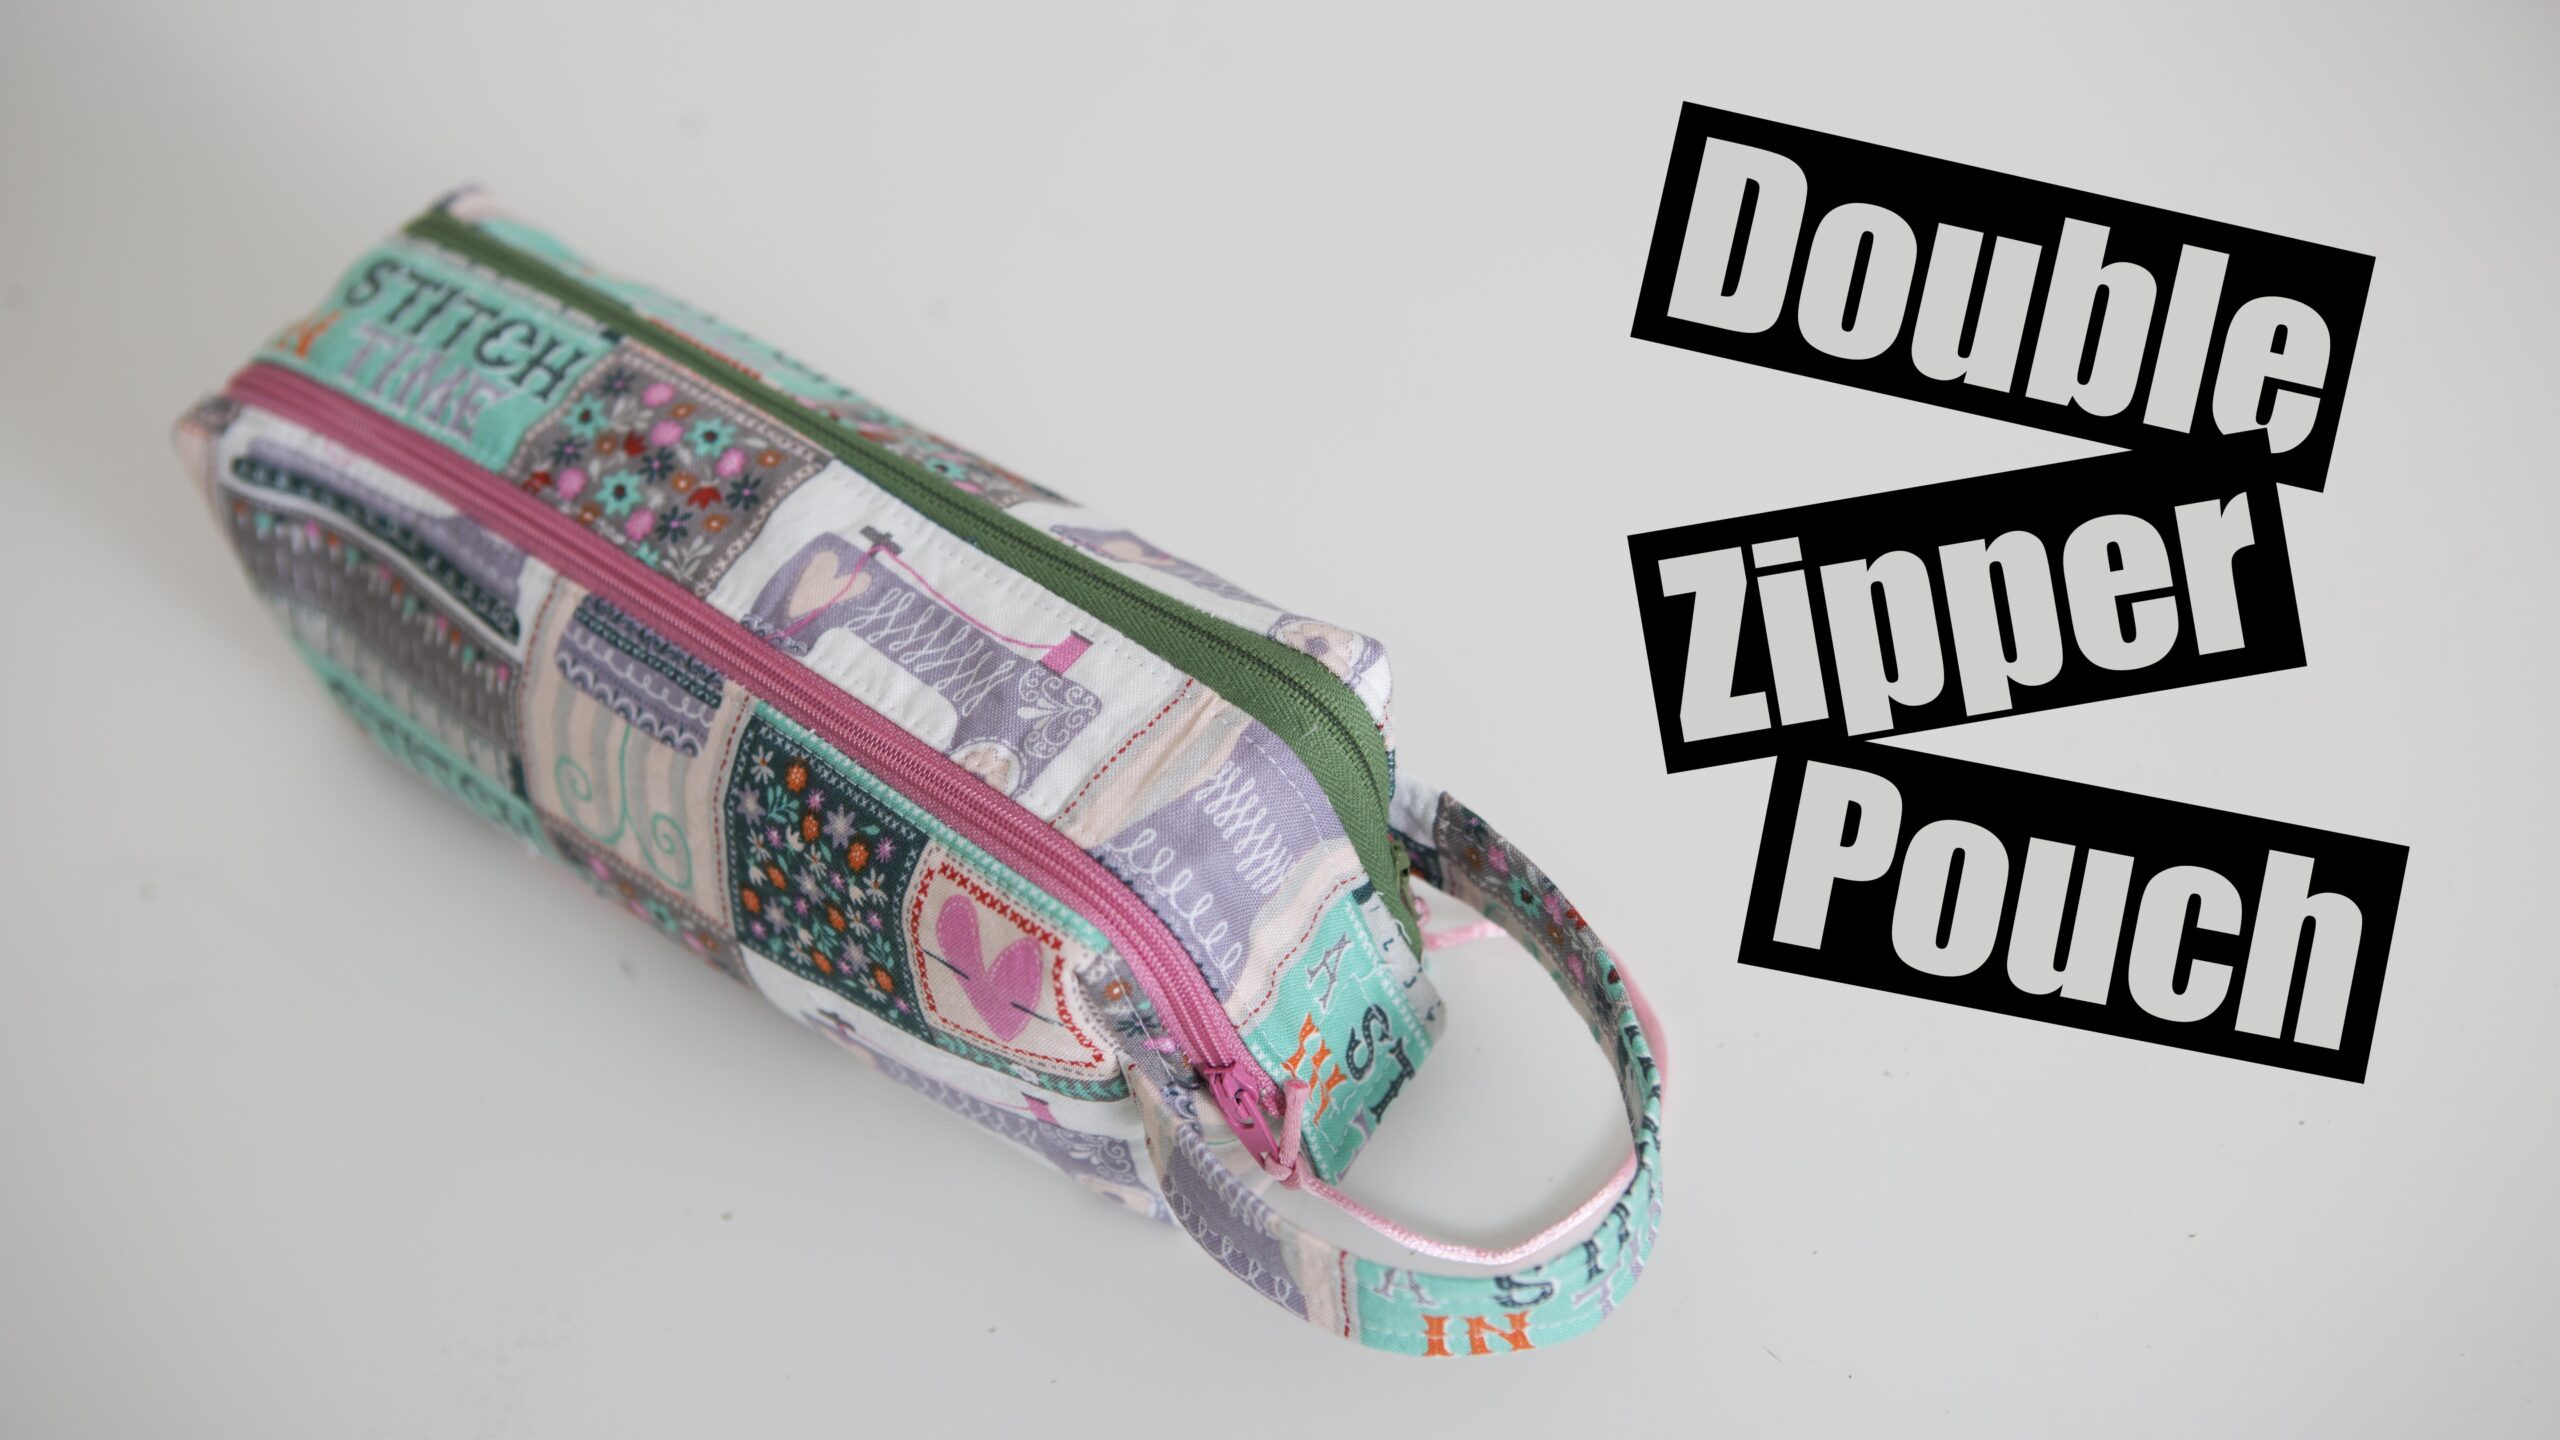 Double zipper box pouch